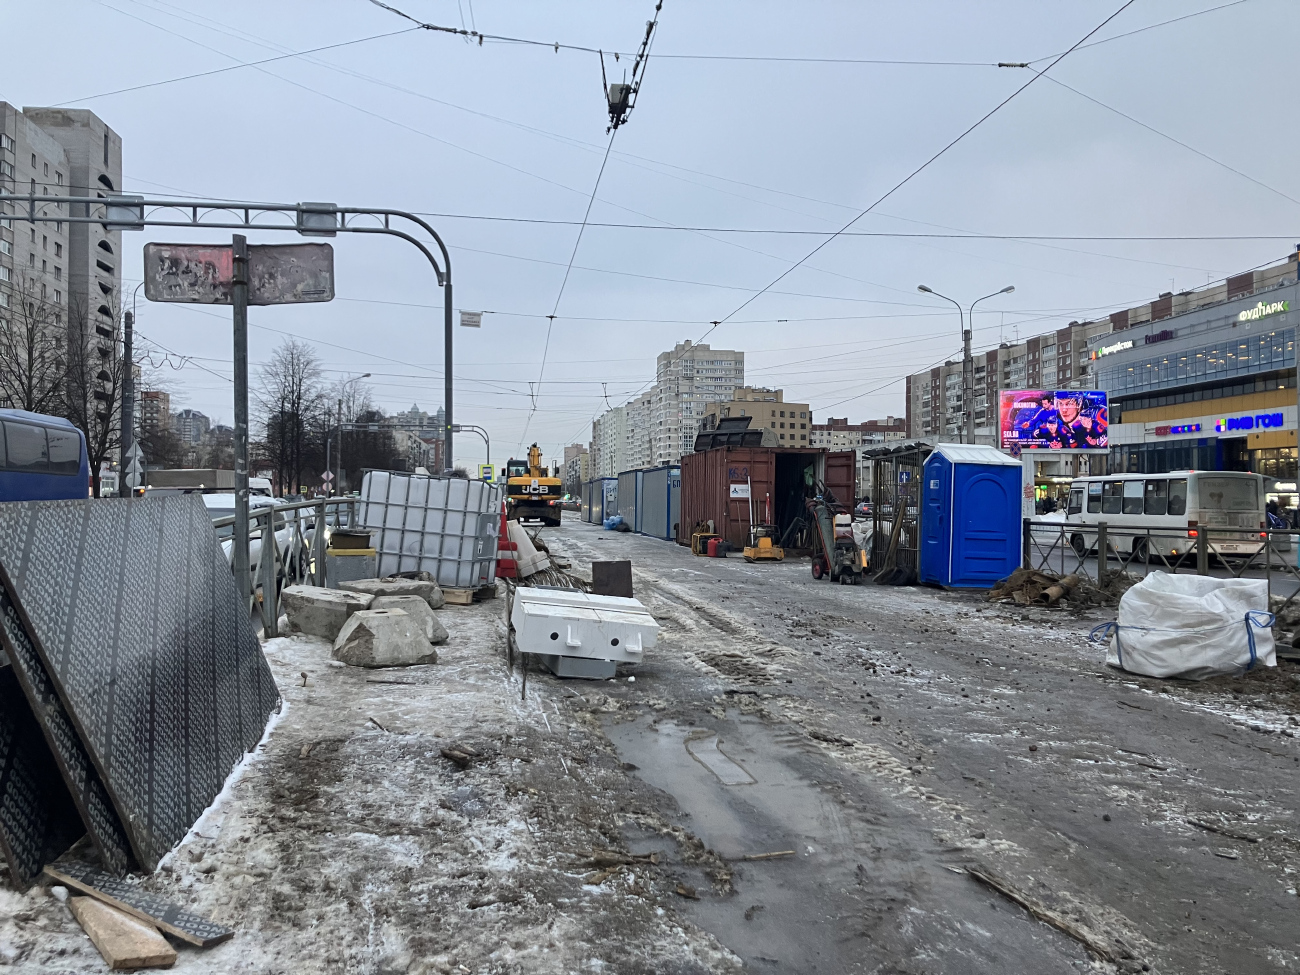 Sankt-Peterburg — Track repairs; Sankt-Peterburg — Tram lines and infrastructure